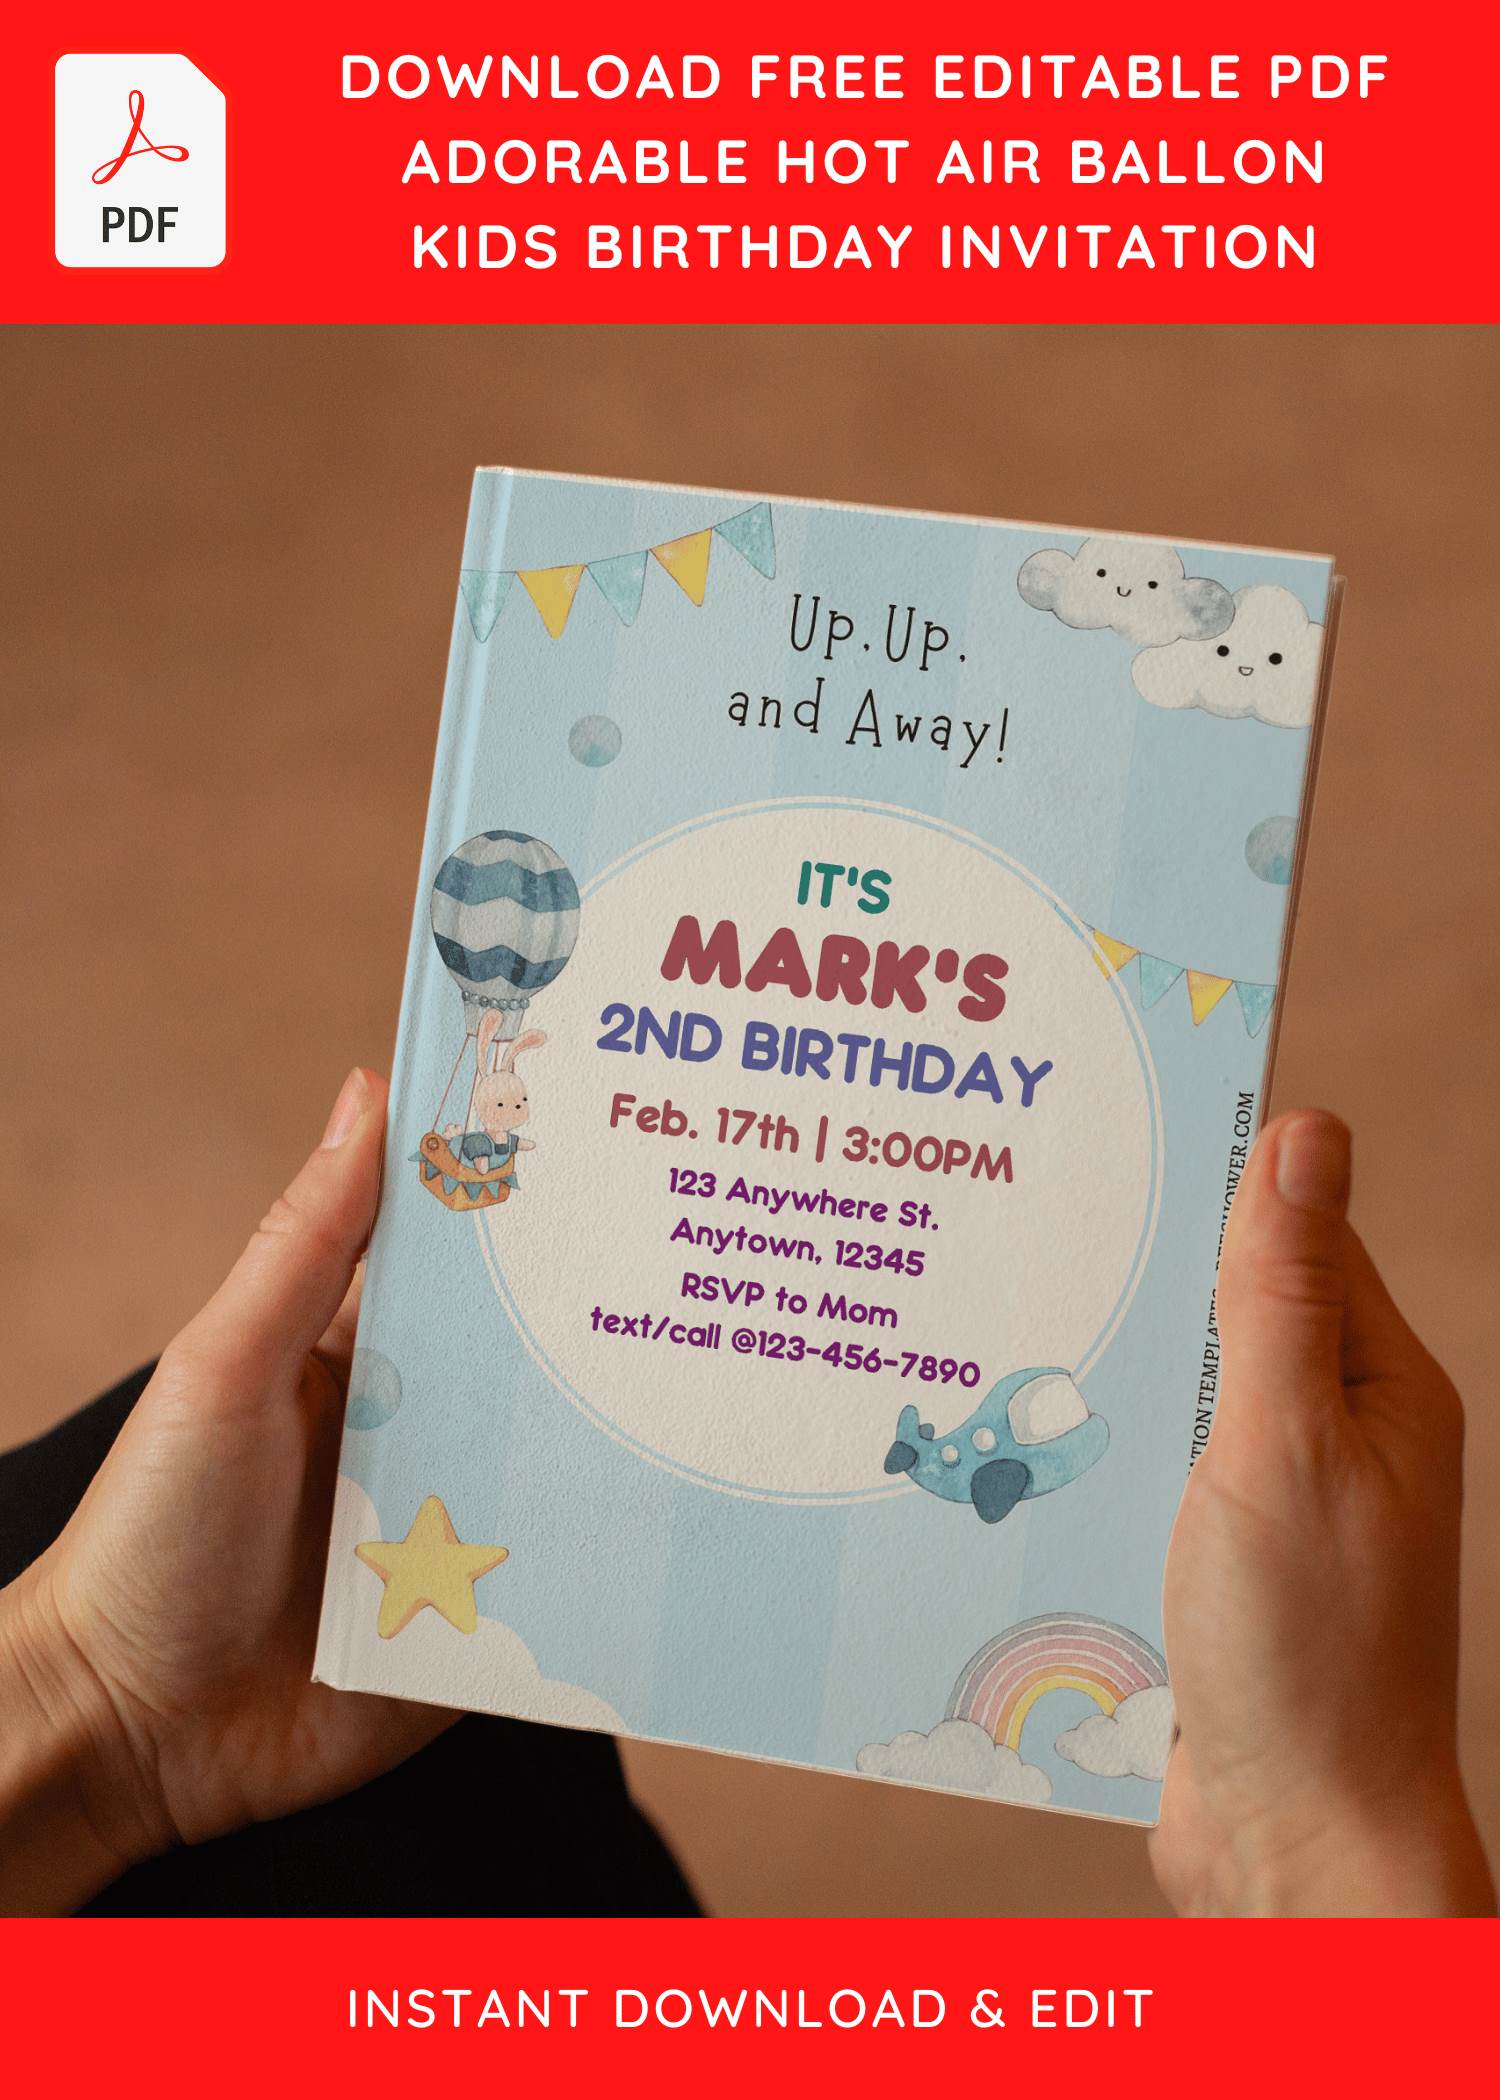 (Free Editable PDF) Up Away Hot Air Balloon Birthday Invitation Templates